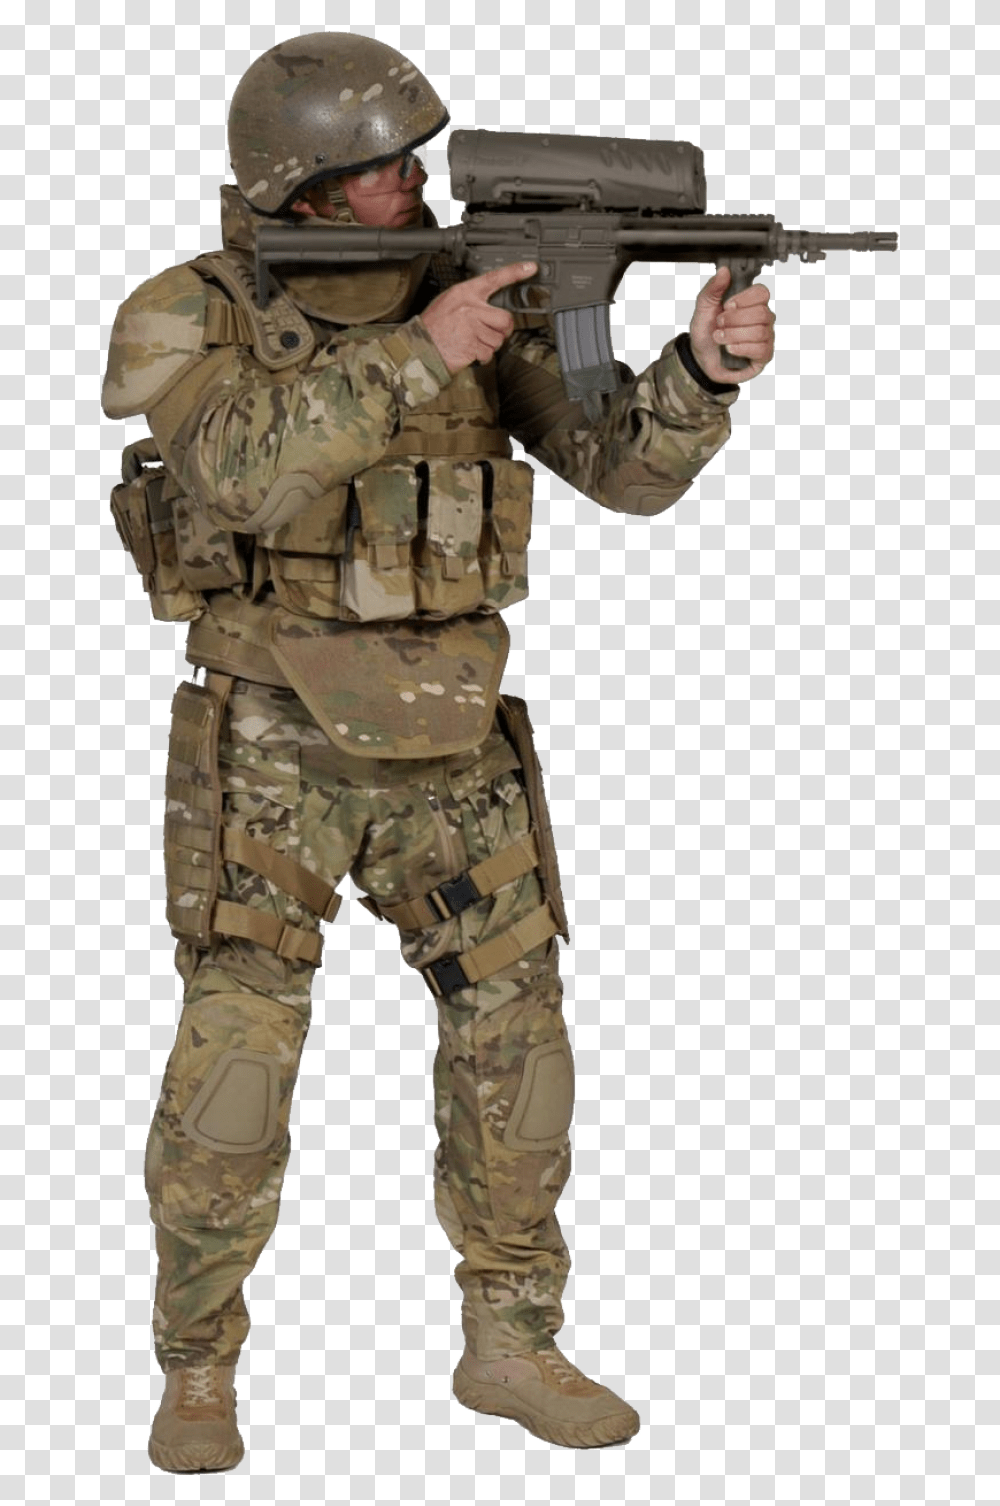 Soldiers 3 Image New Army Uniform 2010, Person, Military Uniform, Gun, Weapon Transparent Png